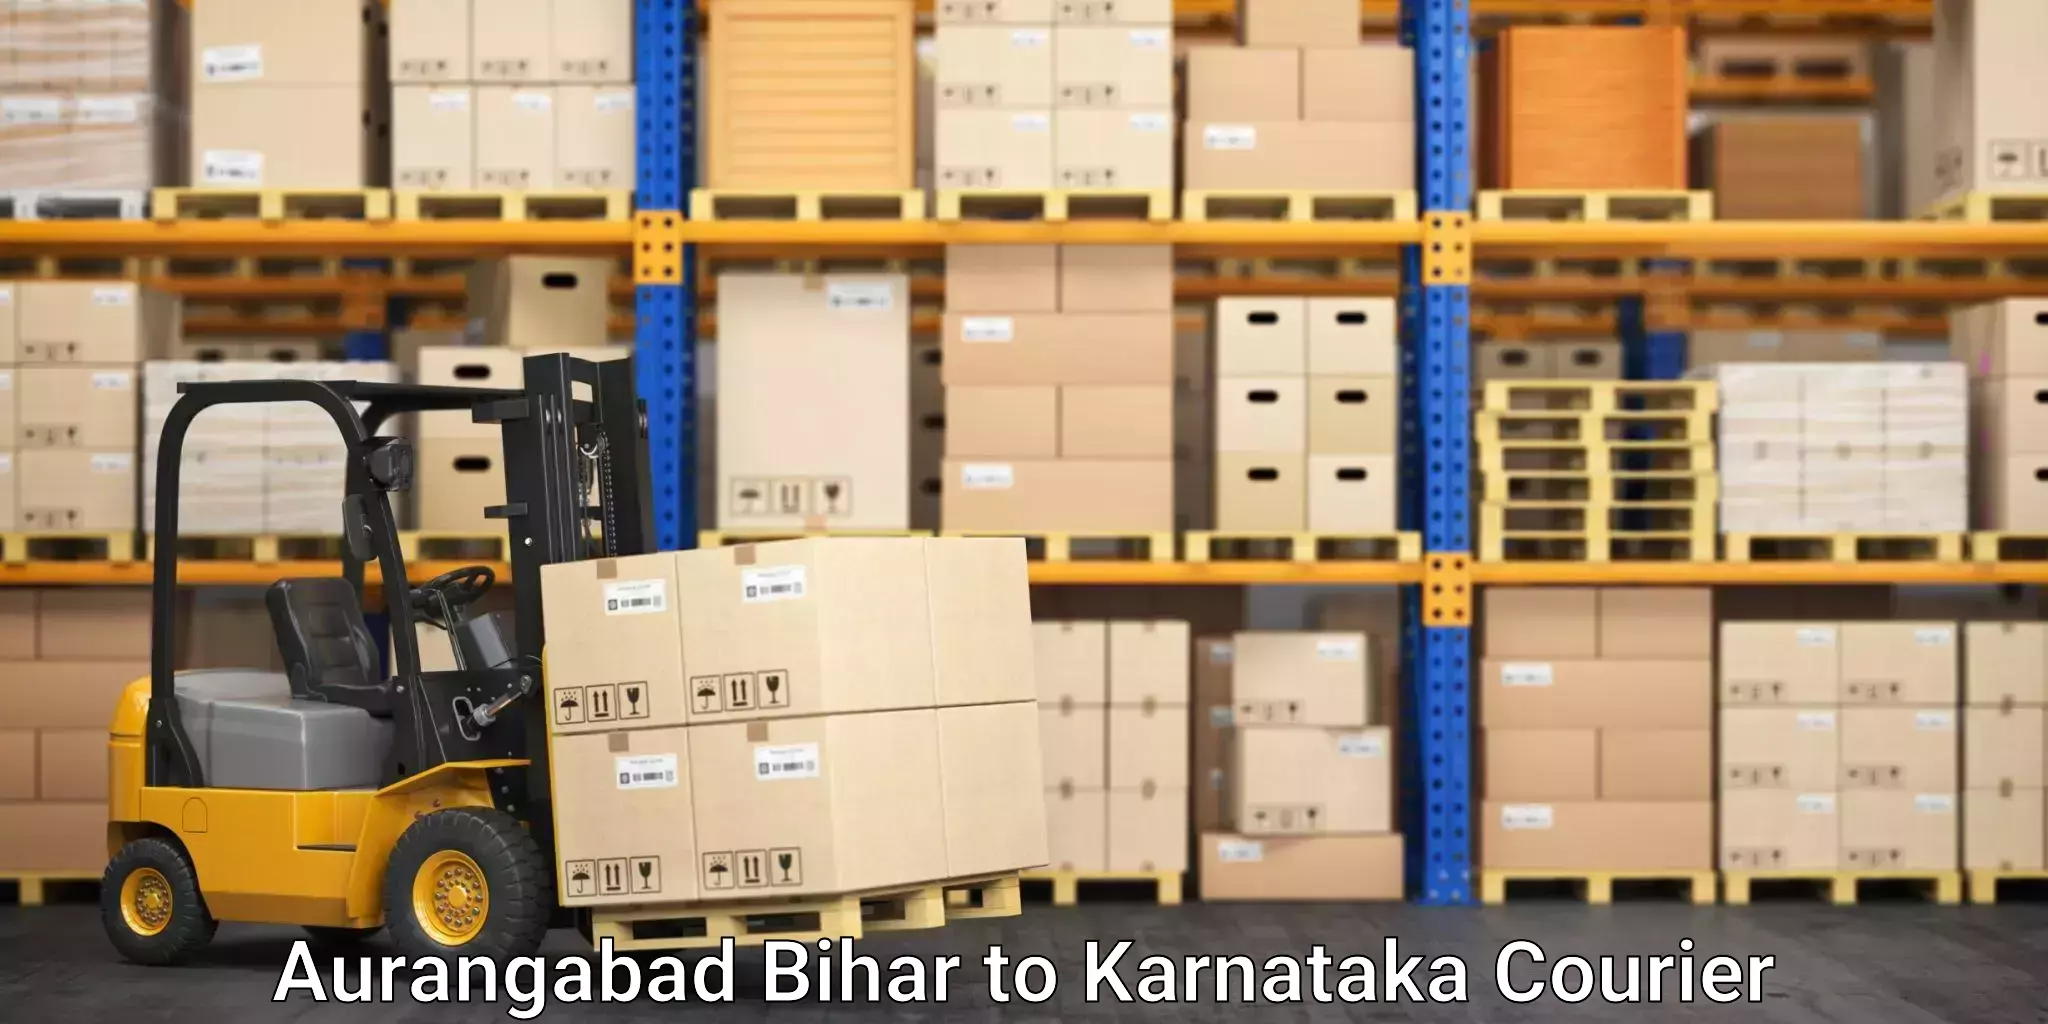 Affordable furniture movers Aurangabad Bihar to Karnataka